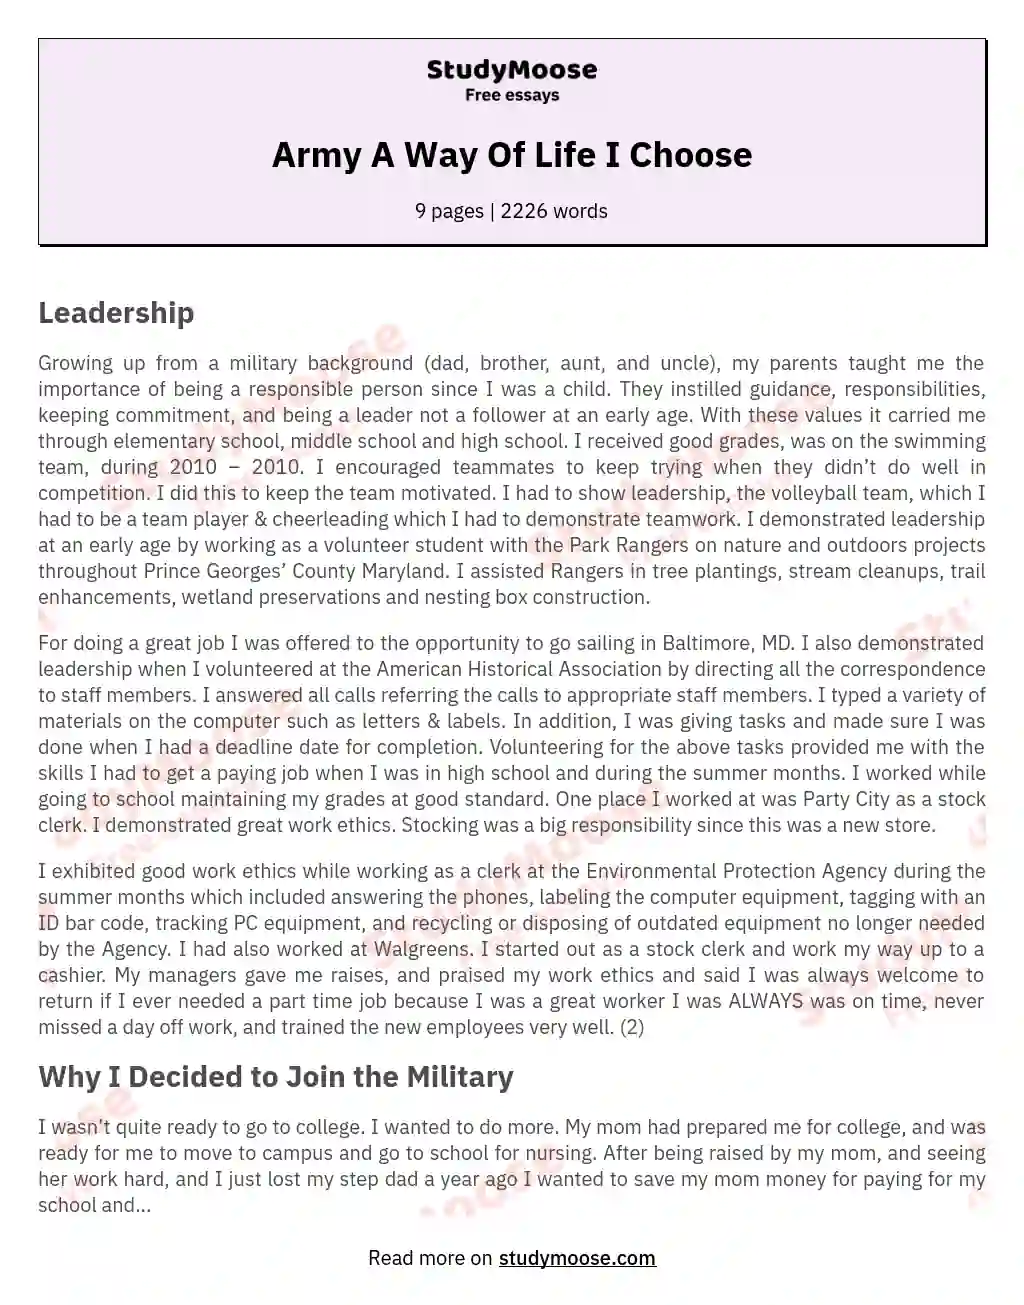 Army A Way Of Life I Choose